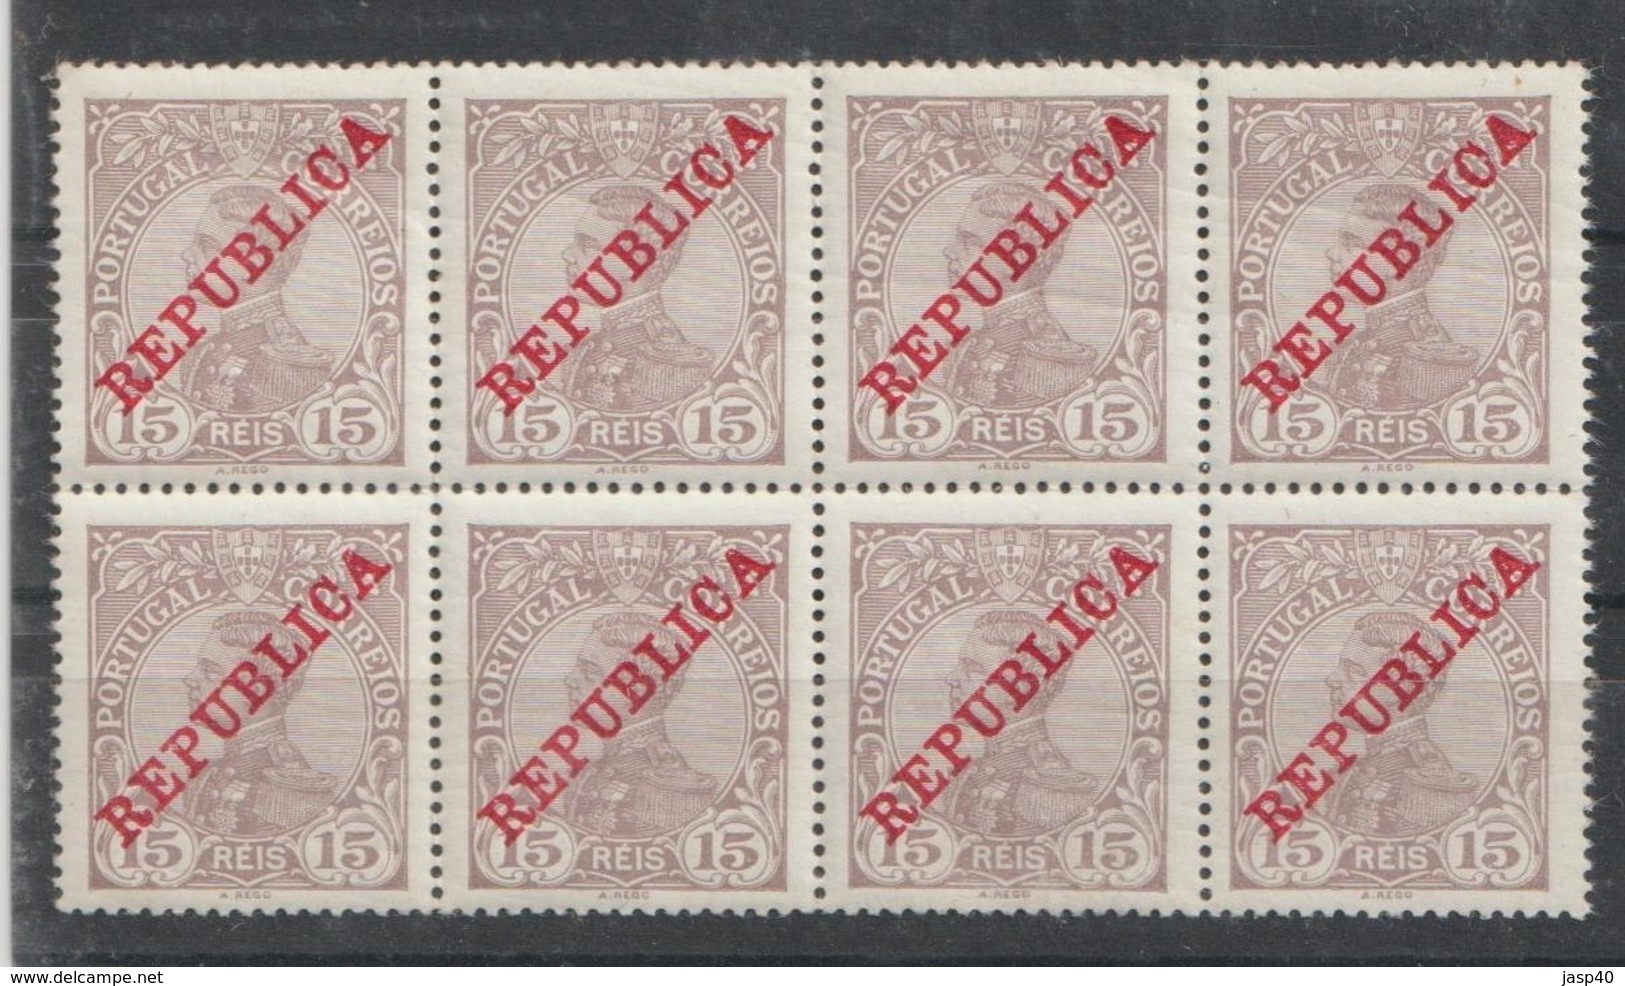 PORTUGAL CE AFINSA 173 - BLOCO COM 8 SELOS NOVOS - Unused Stamps